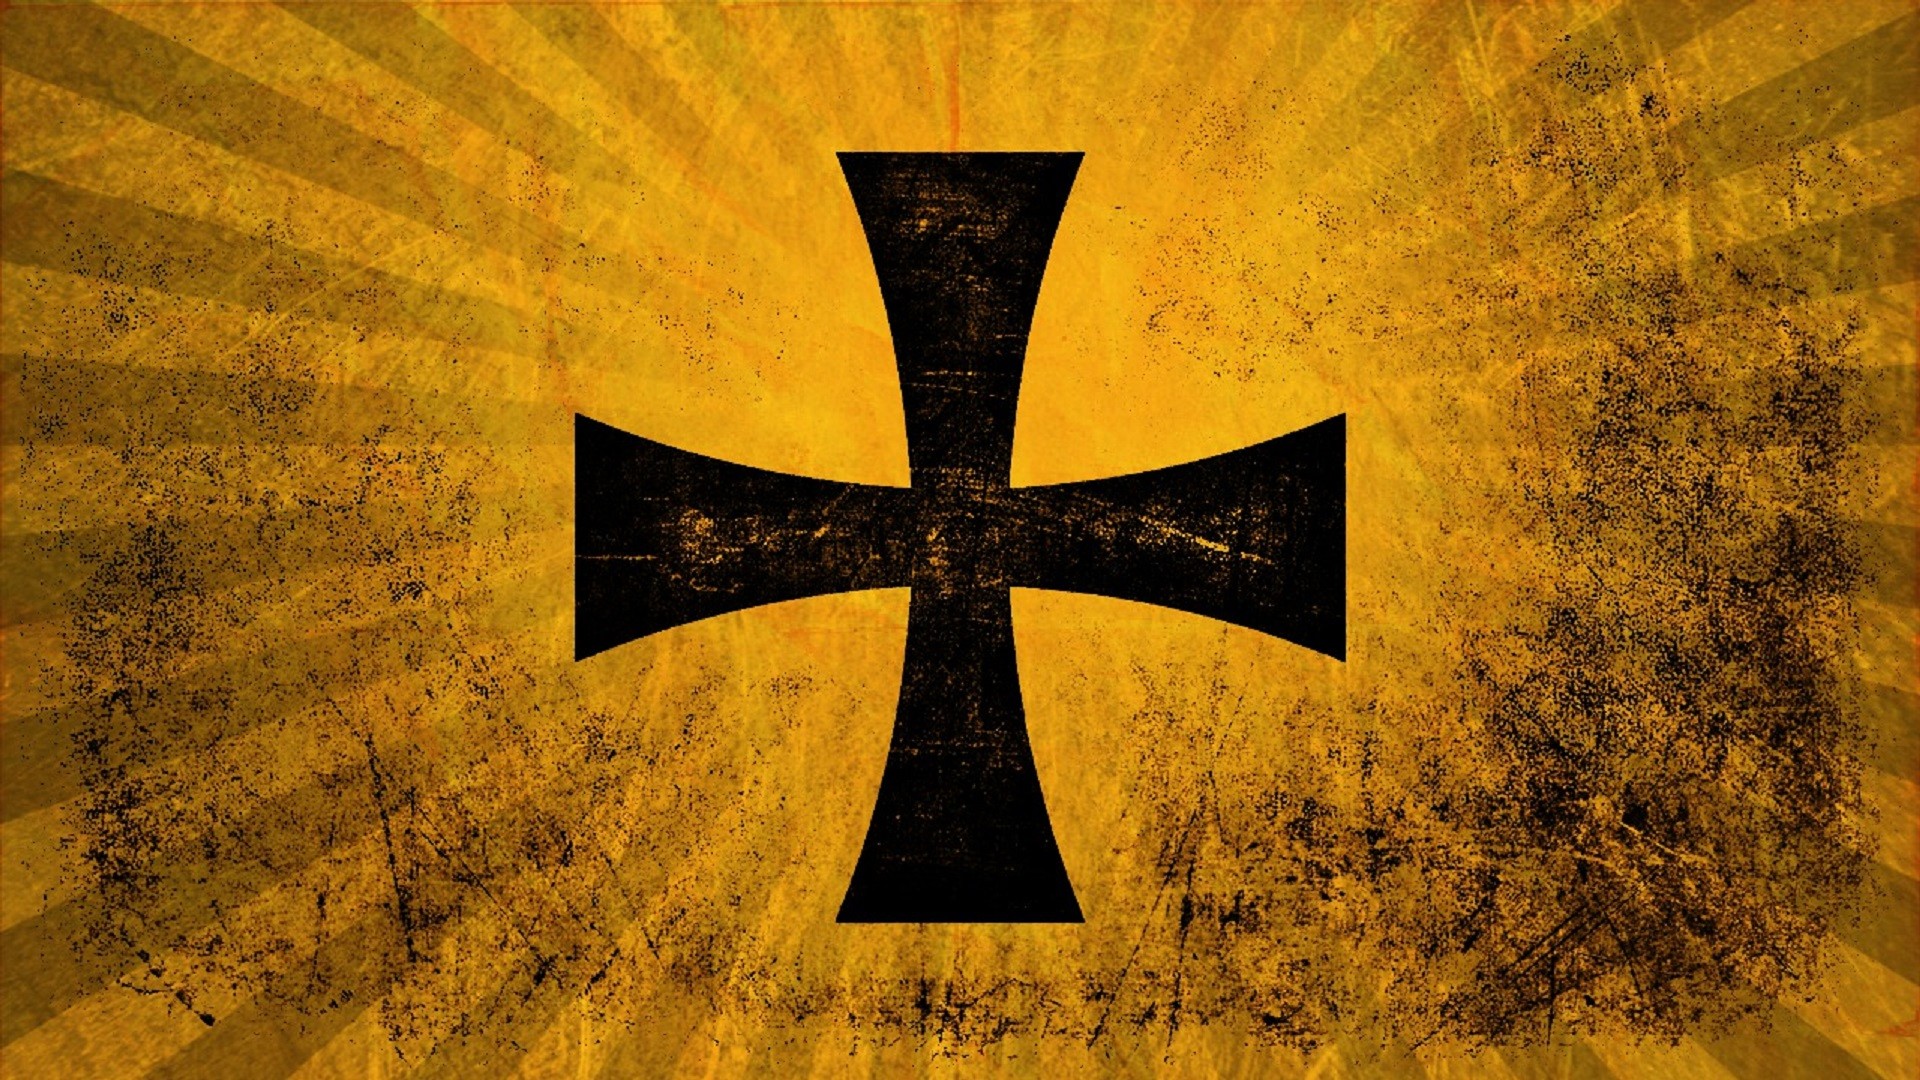 General 1920x1080 cross Christianity flag sun rays orange yellow grunge digital art